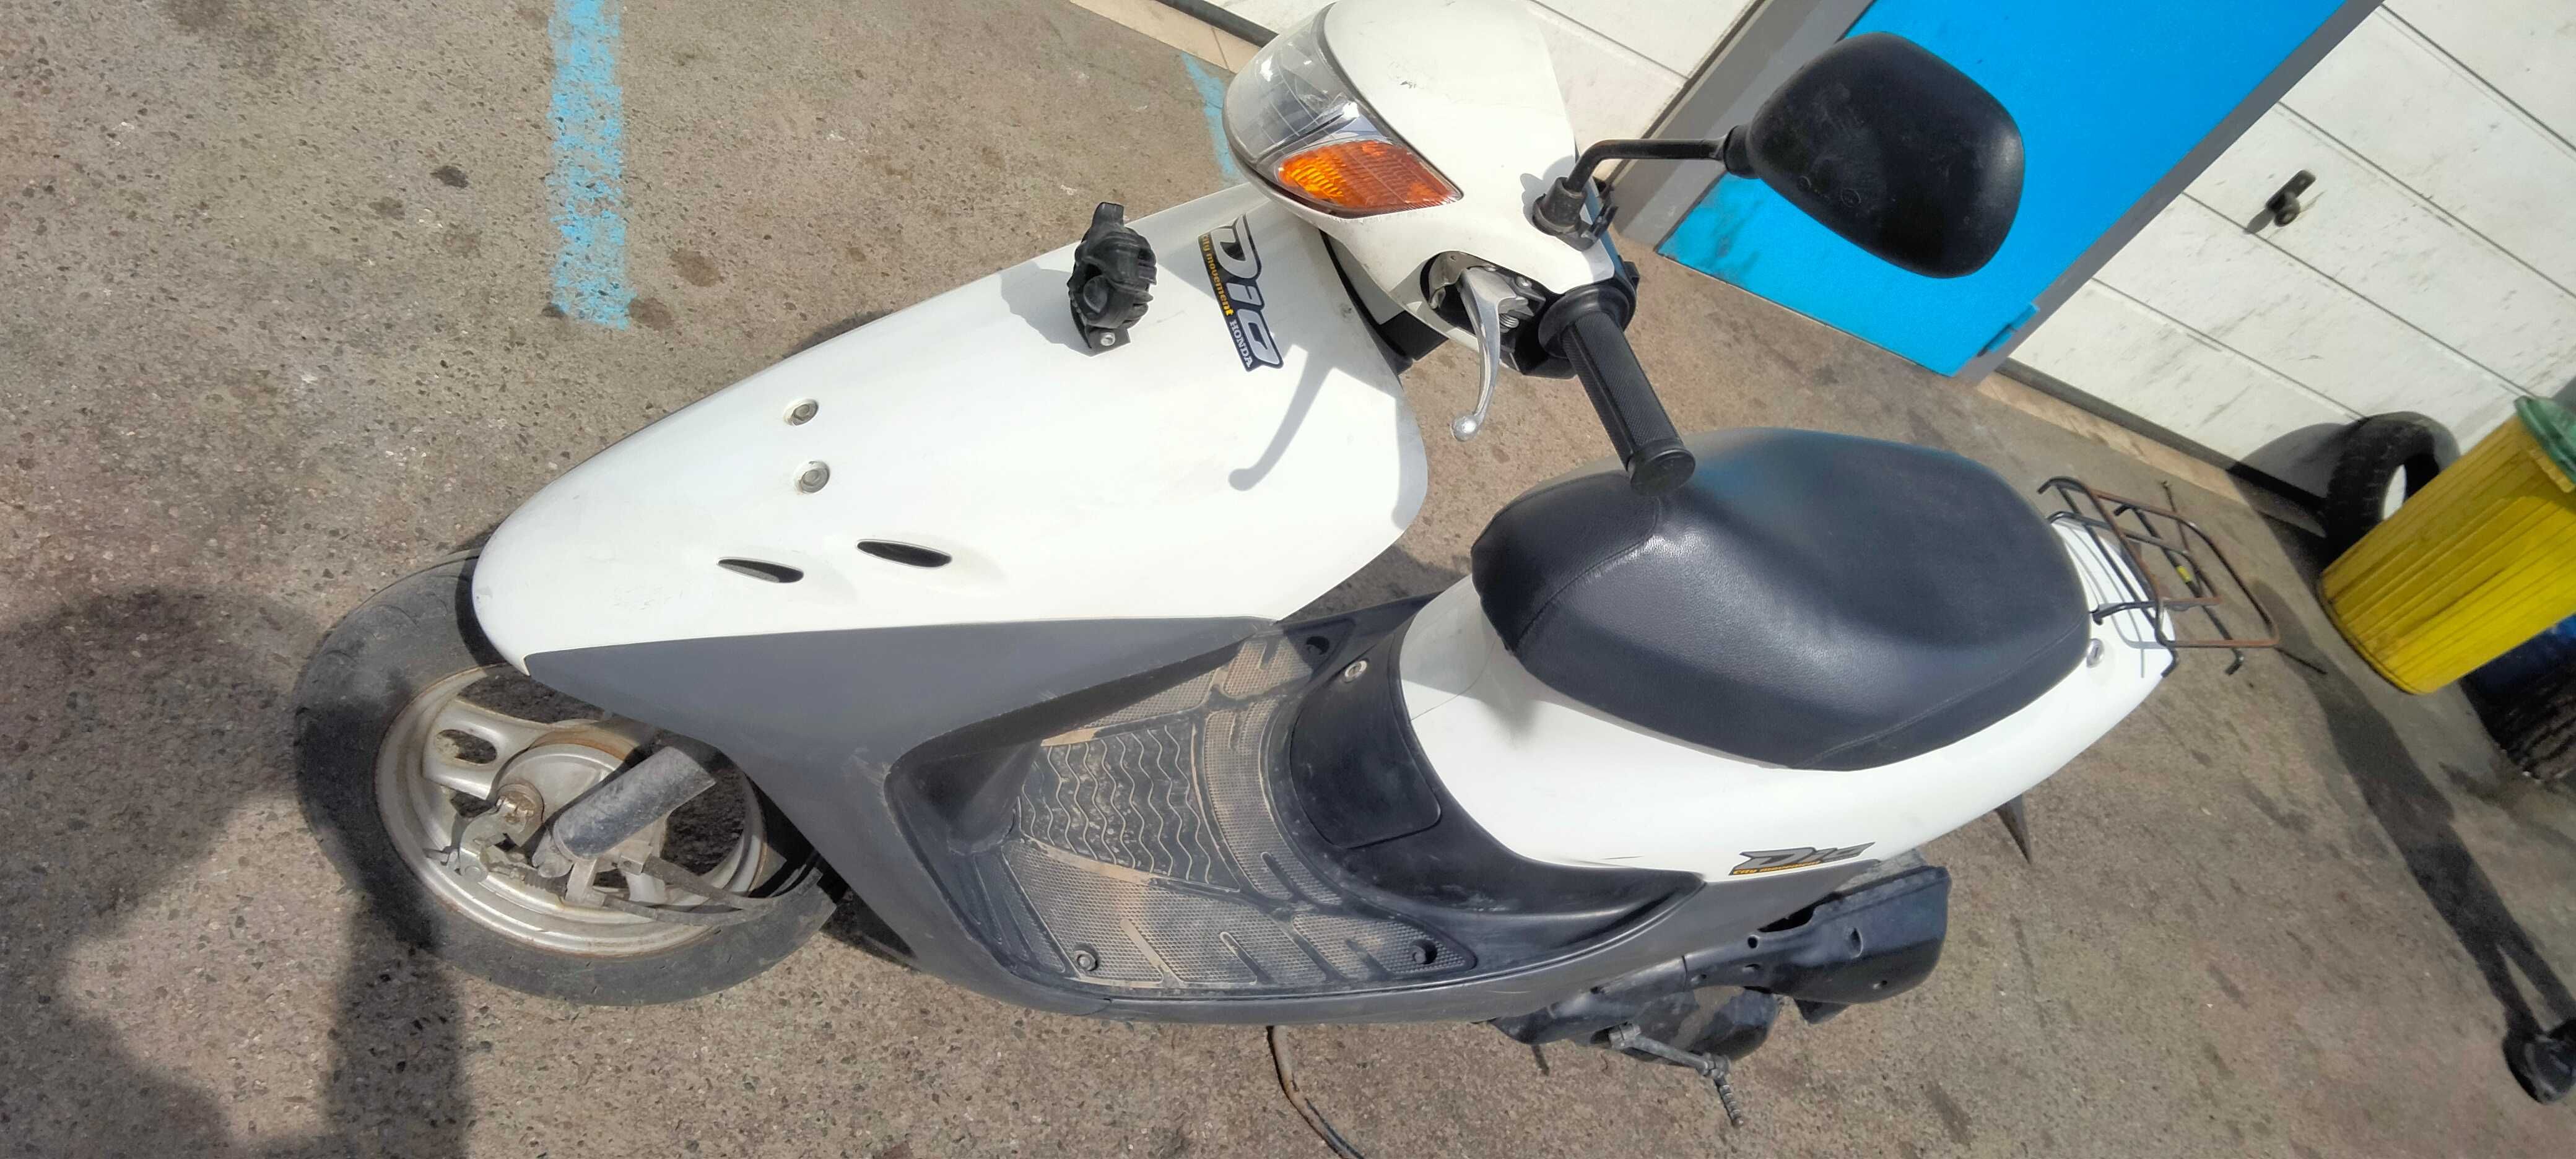 Moped Honda Dio 34